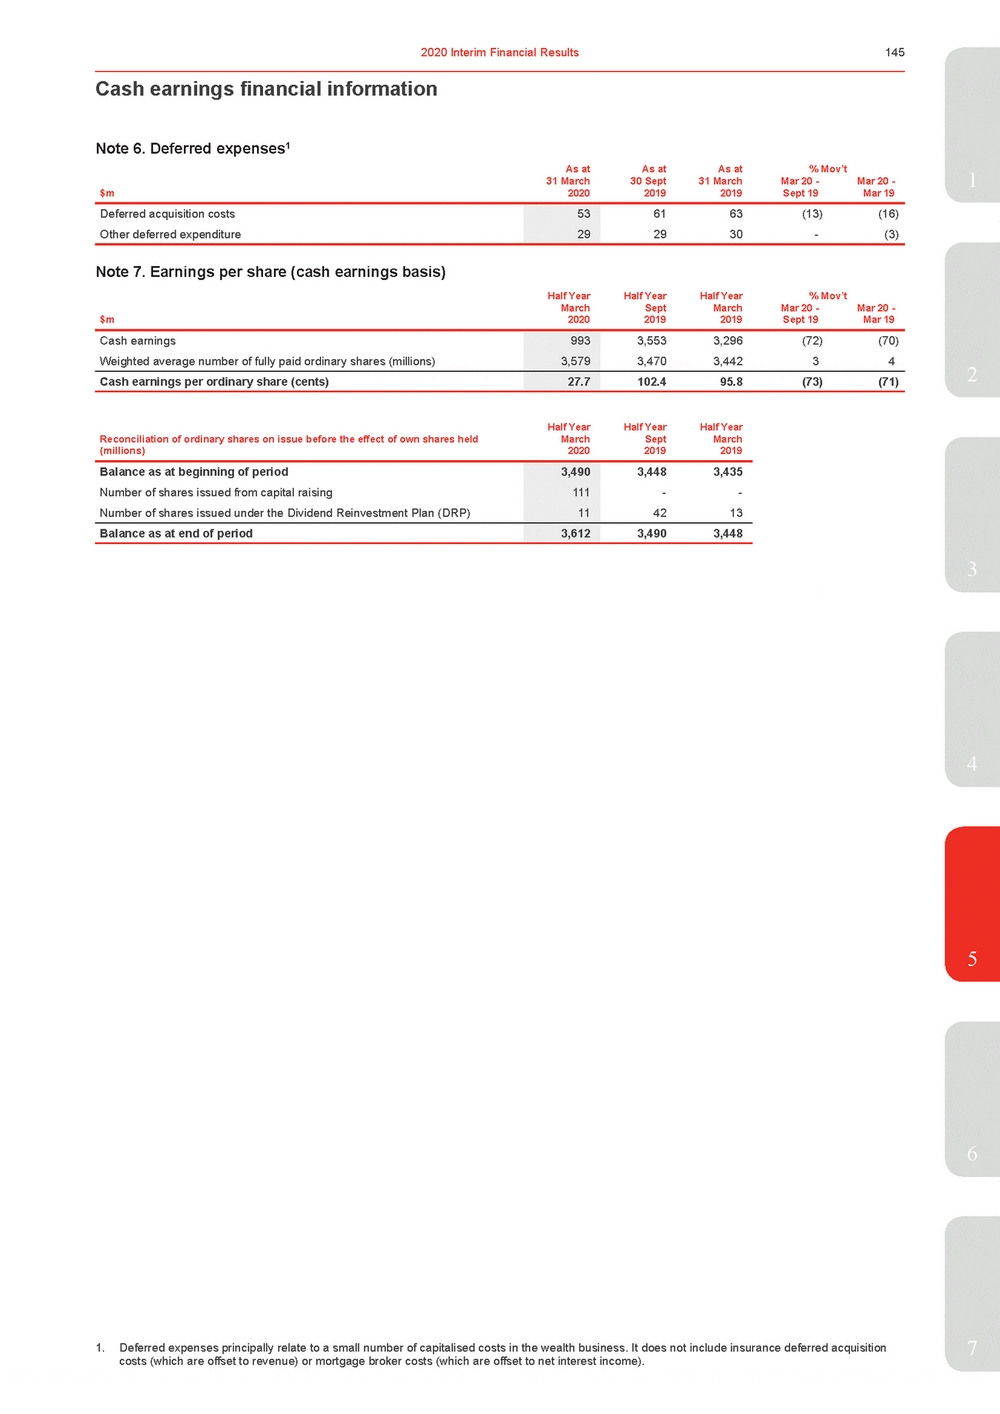 11676-3-ex1_westpac 2020 interim financial results announcement_page_150.jpg